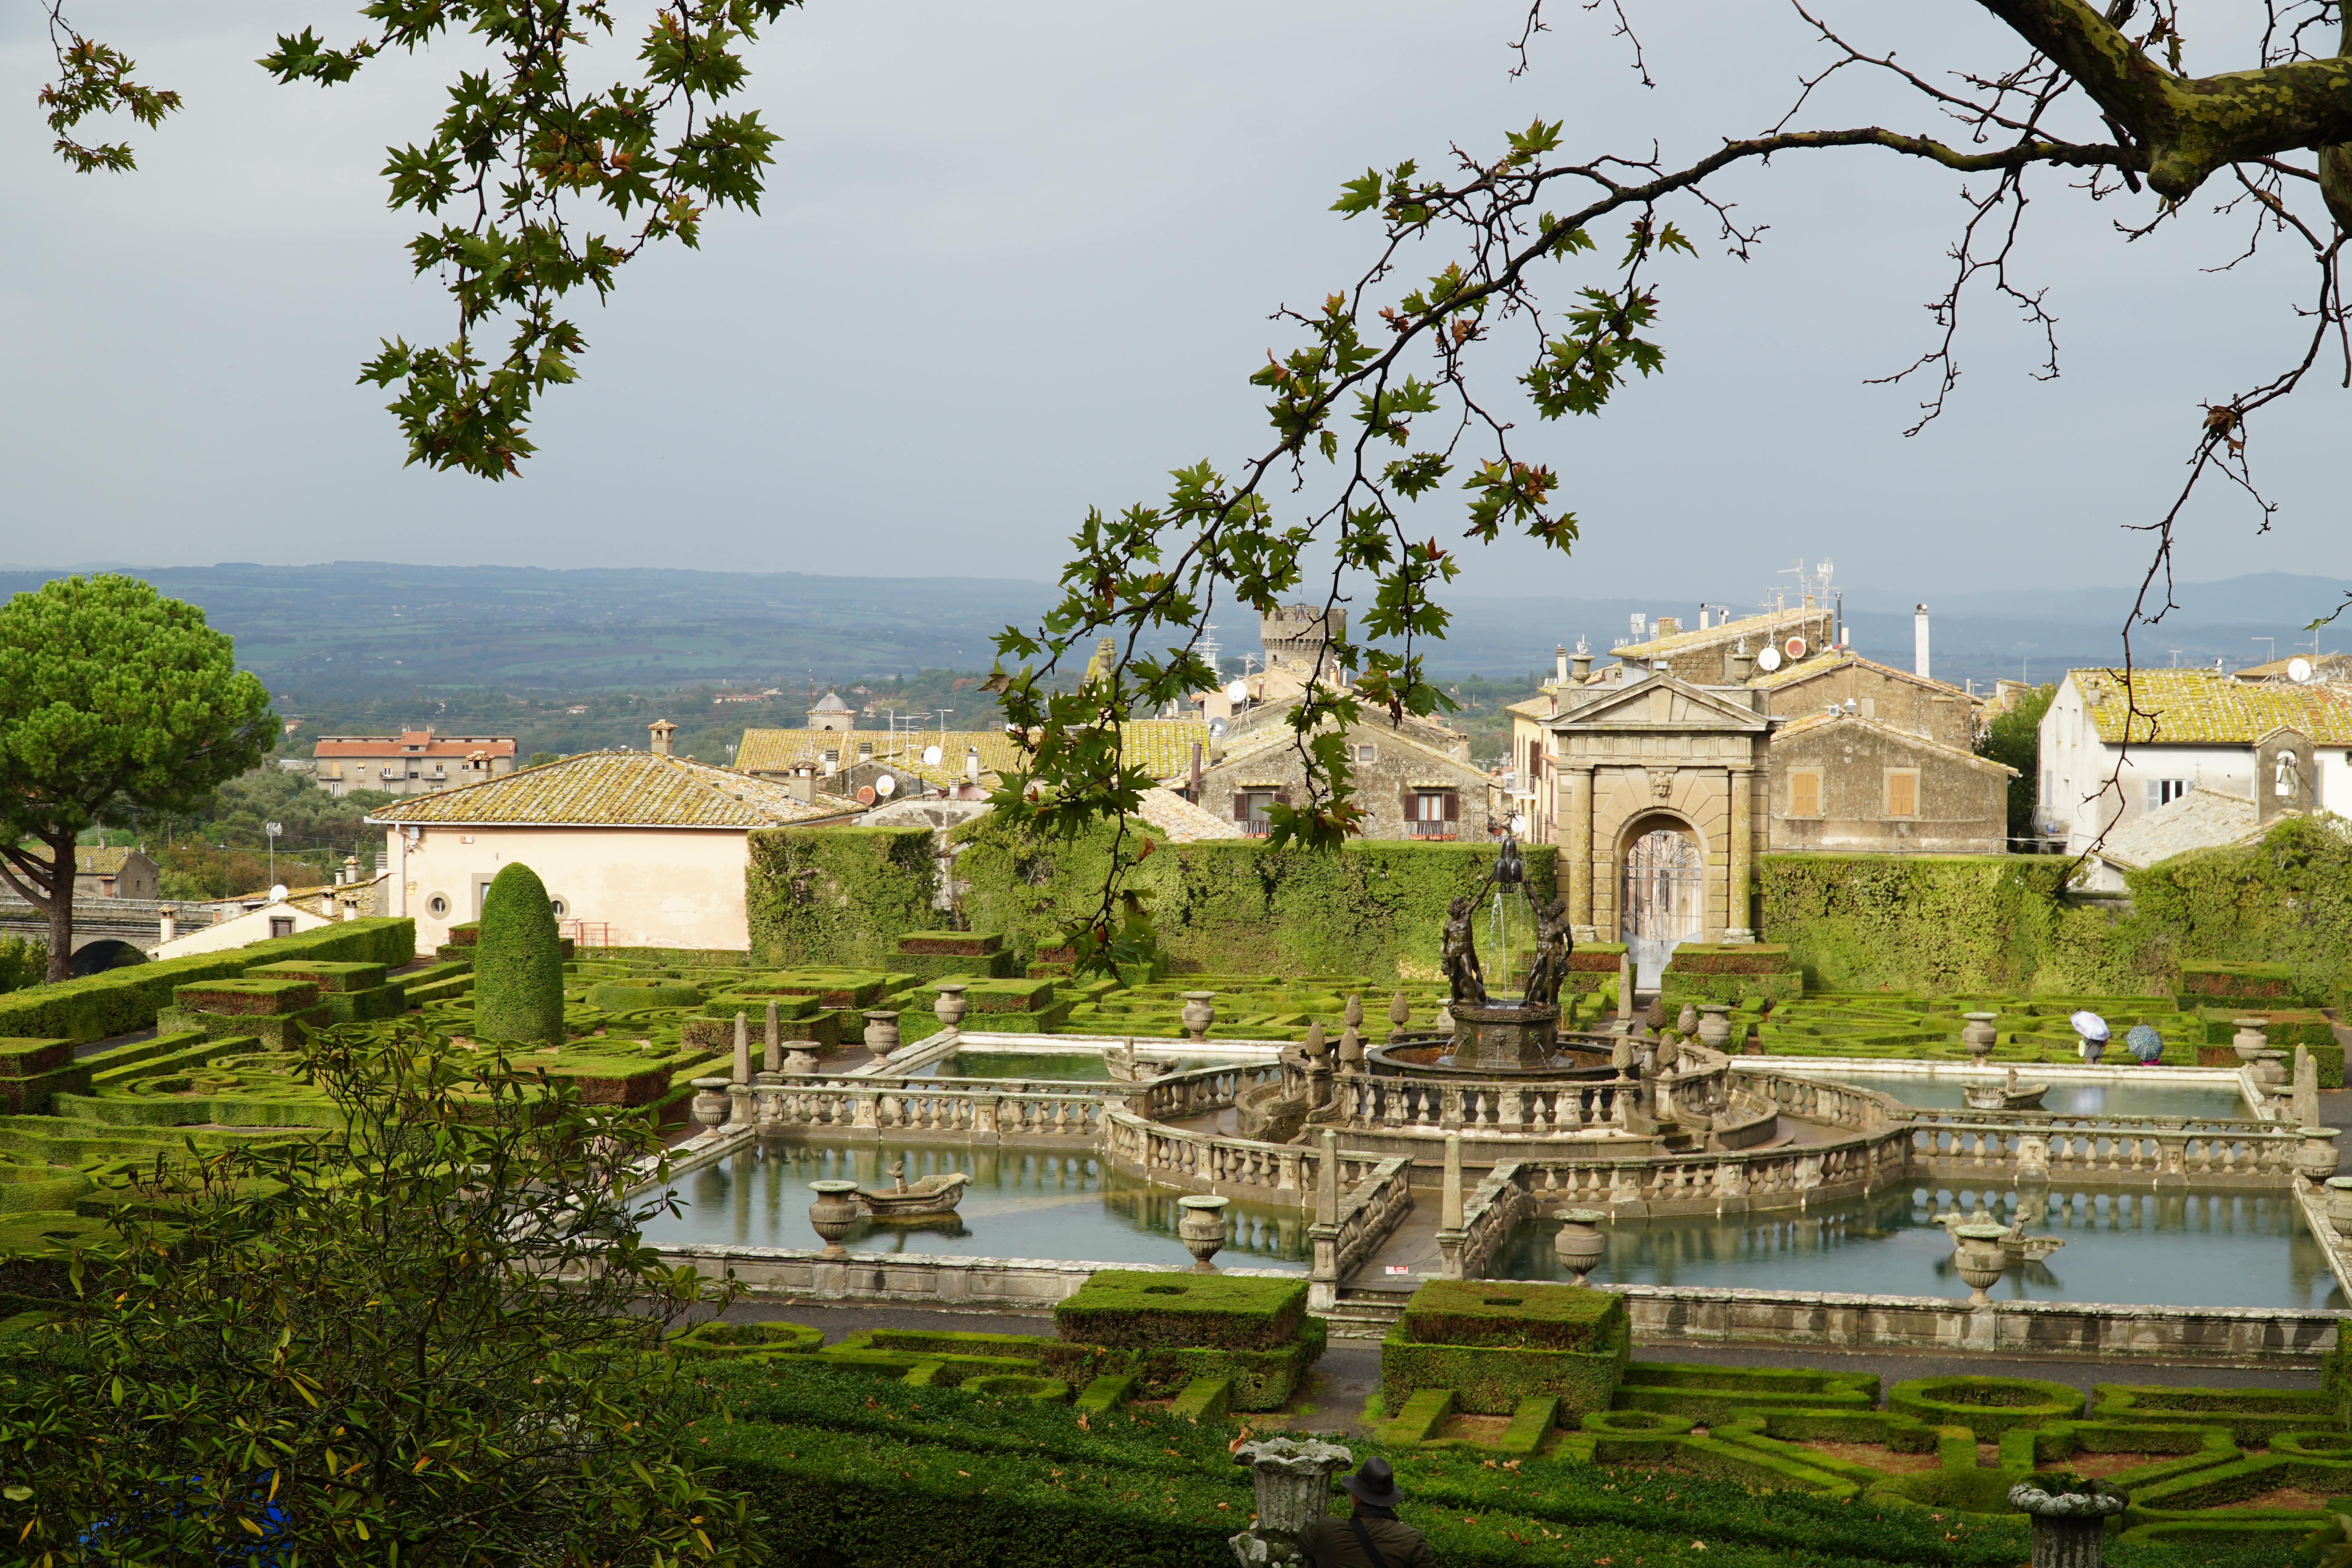 Image of base of gardens at Villa Lante.